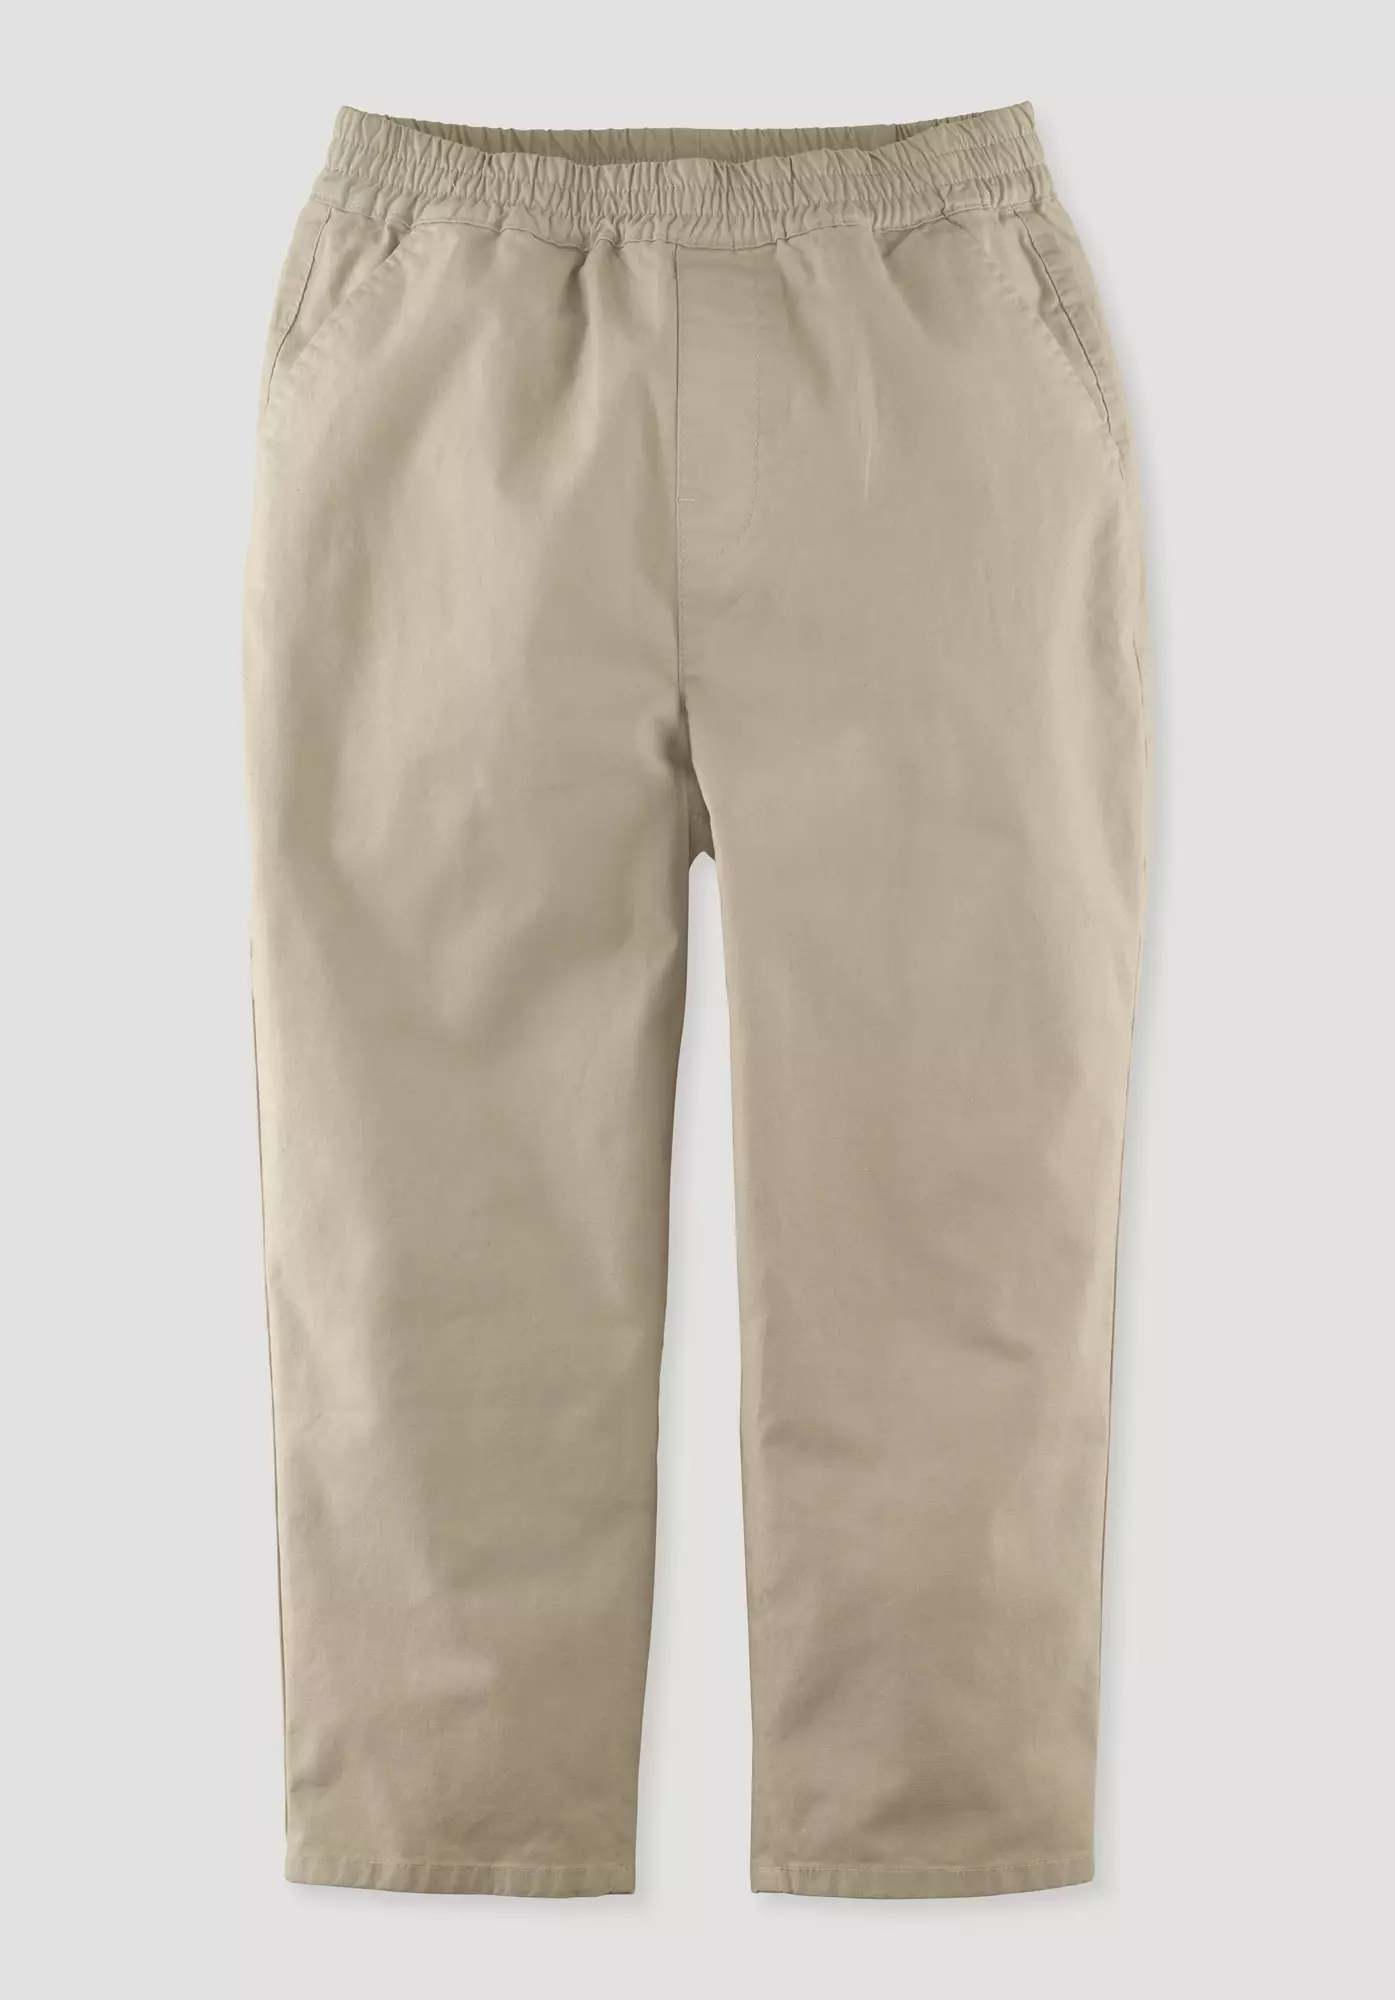 Pants made of organic cotton with hemp - 1